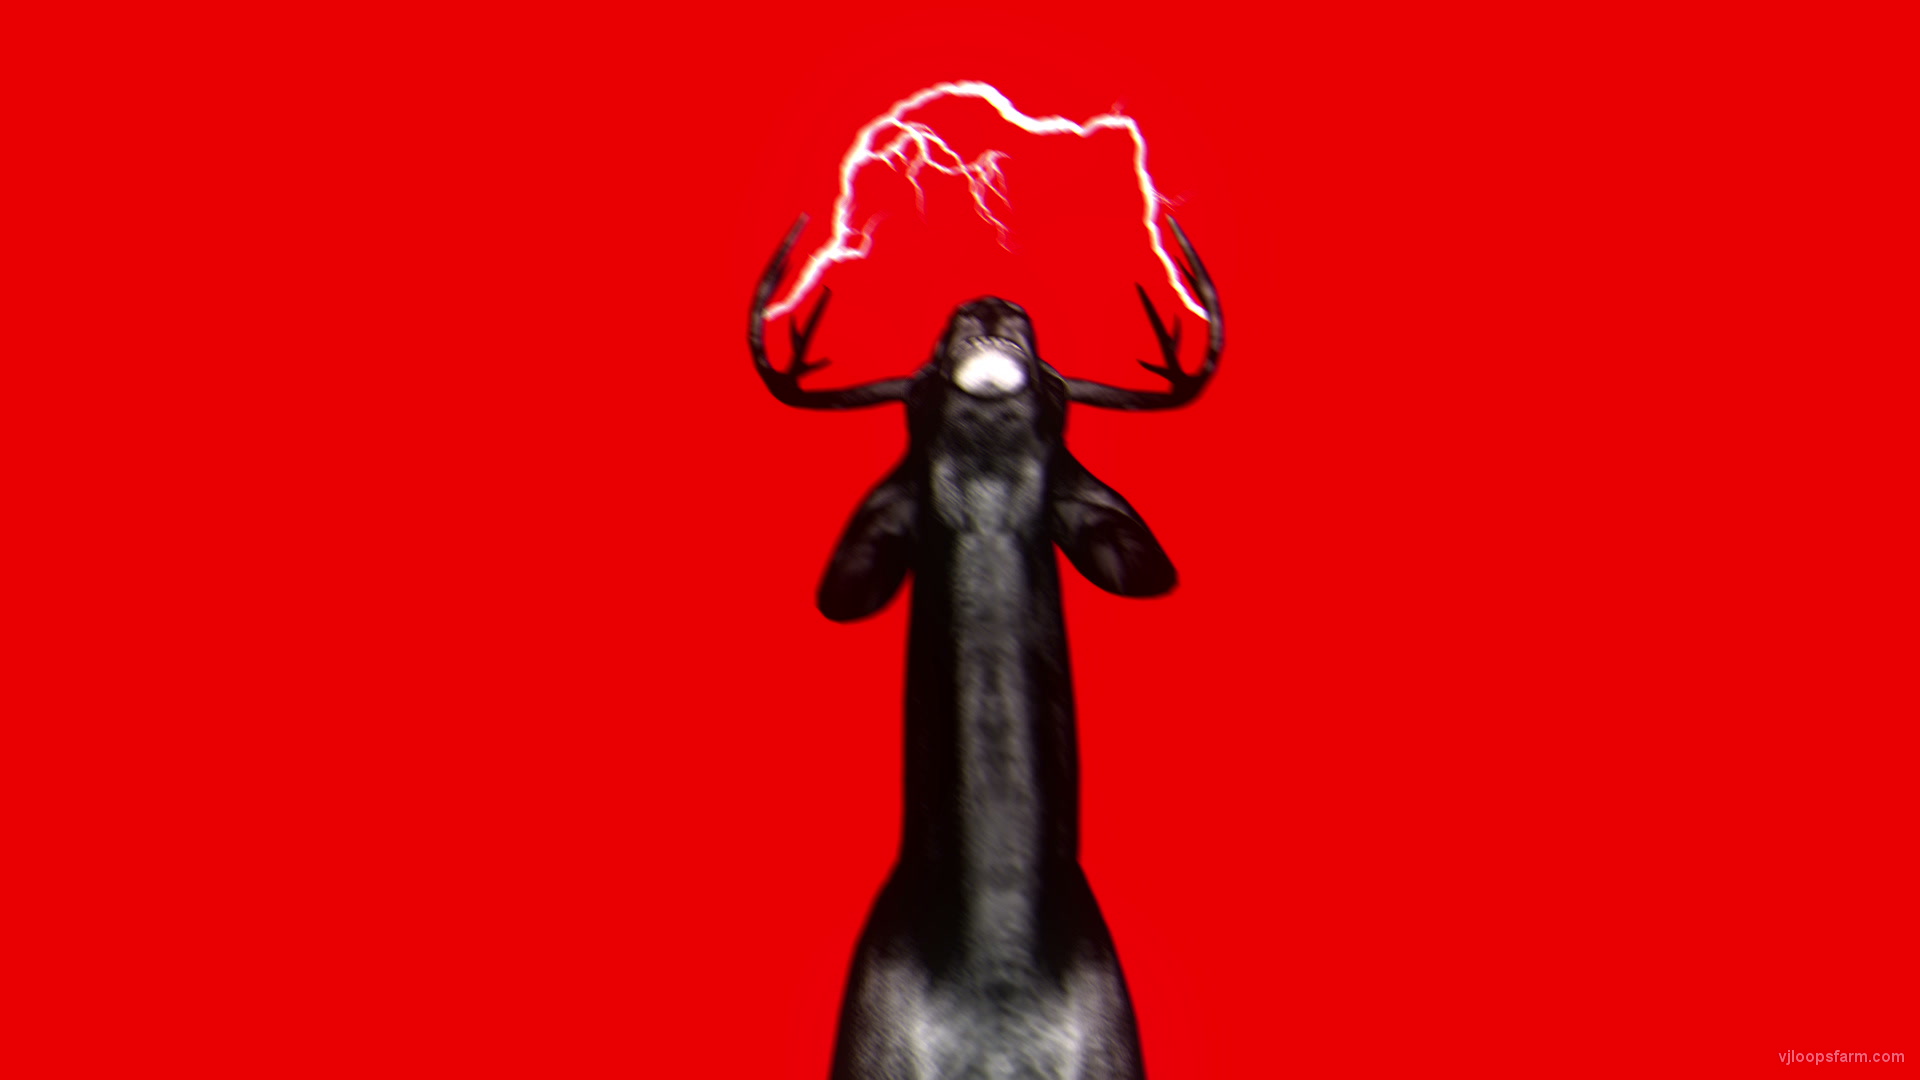 Minimal Deer on red background V1 – VJ Loop